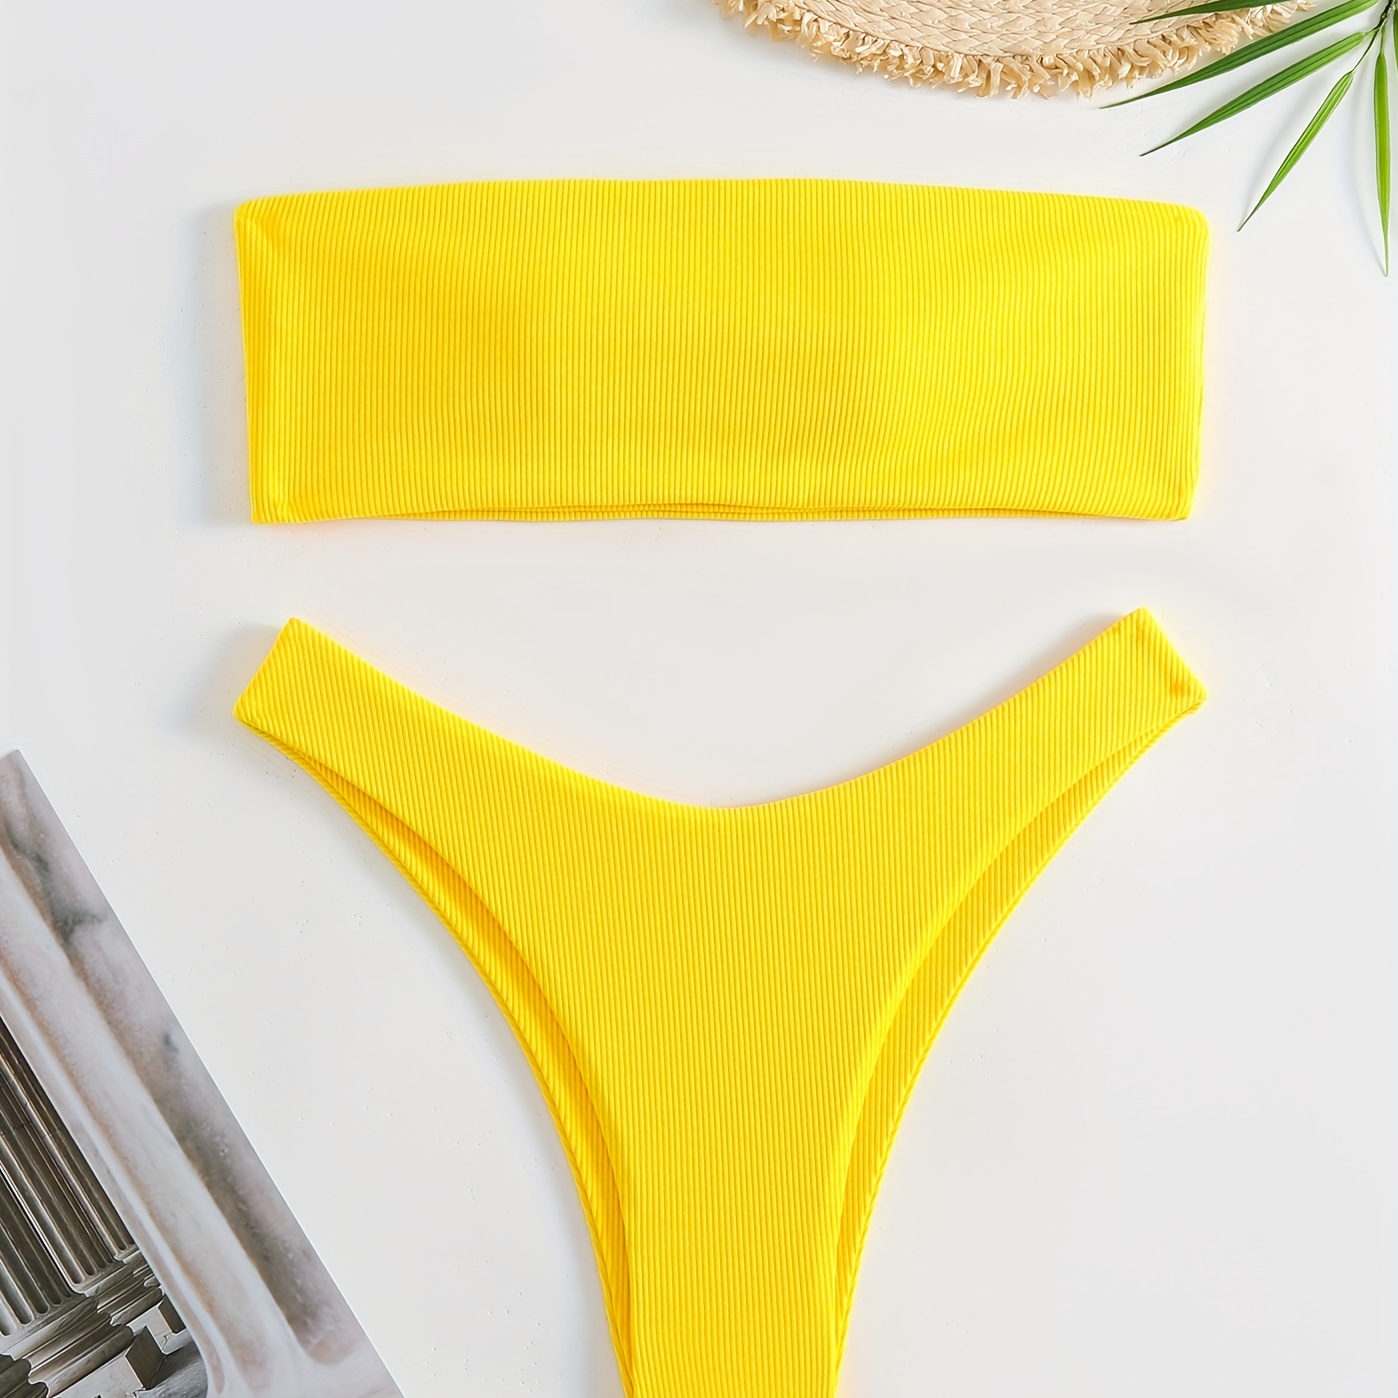 

Rib Knit Yellow Bandeau 2 Piece Set Bikini, High Cut Solid Color Stretchy Swimsuit For Beach Pool, Women's Swimwear & Clothing